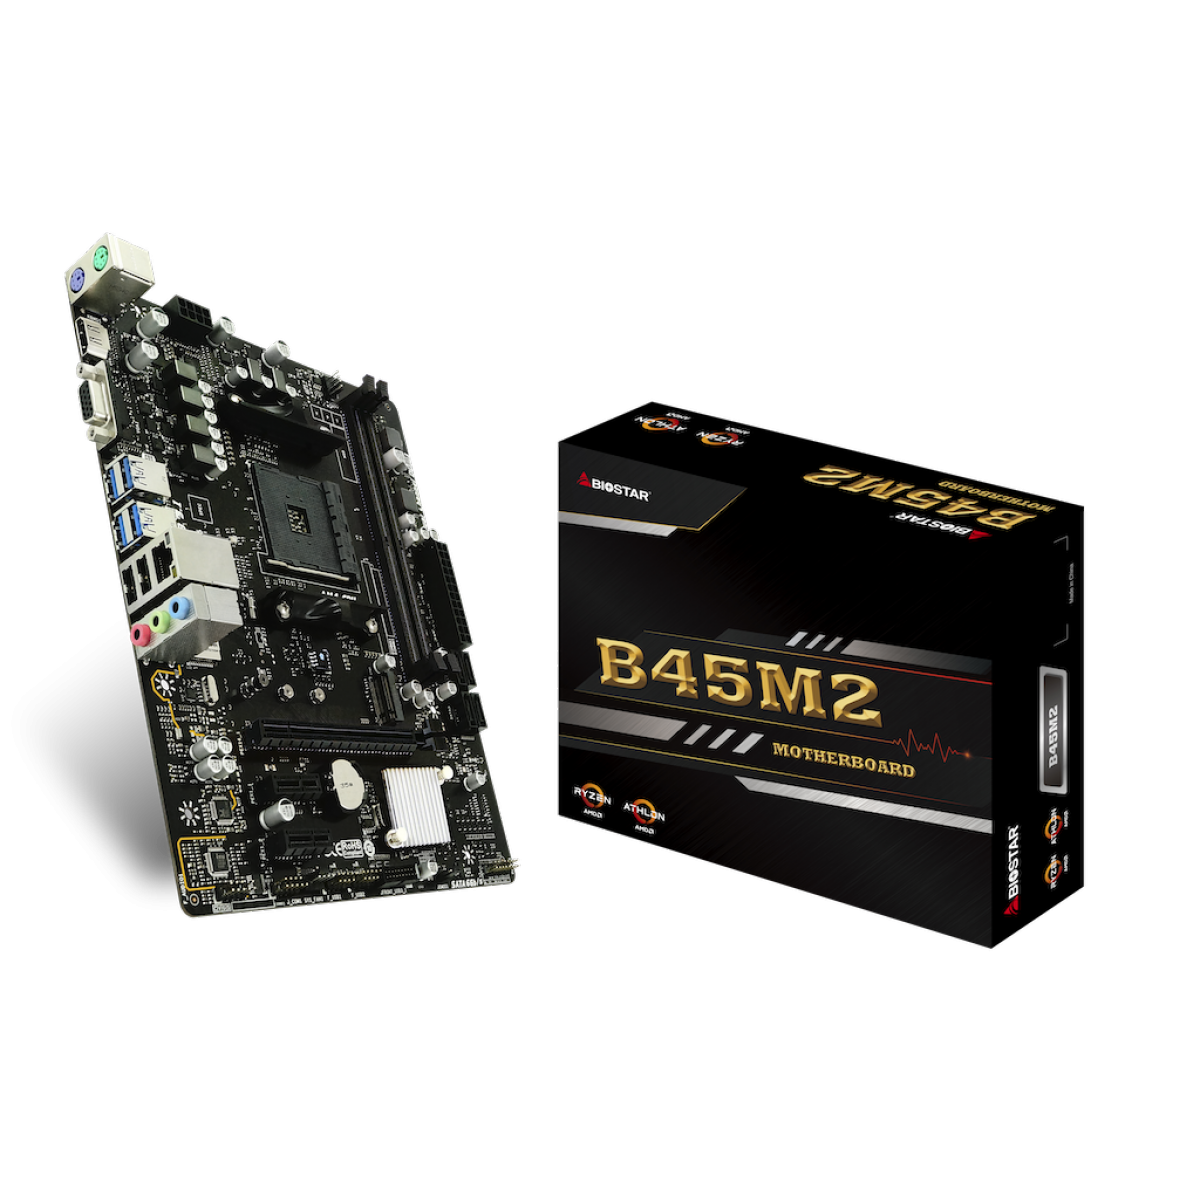 Placa Mãe Biostar B45M2, Chipset B350, AMD AM4, mATX, DDR4